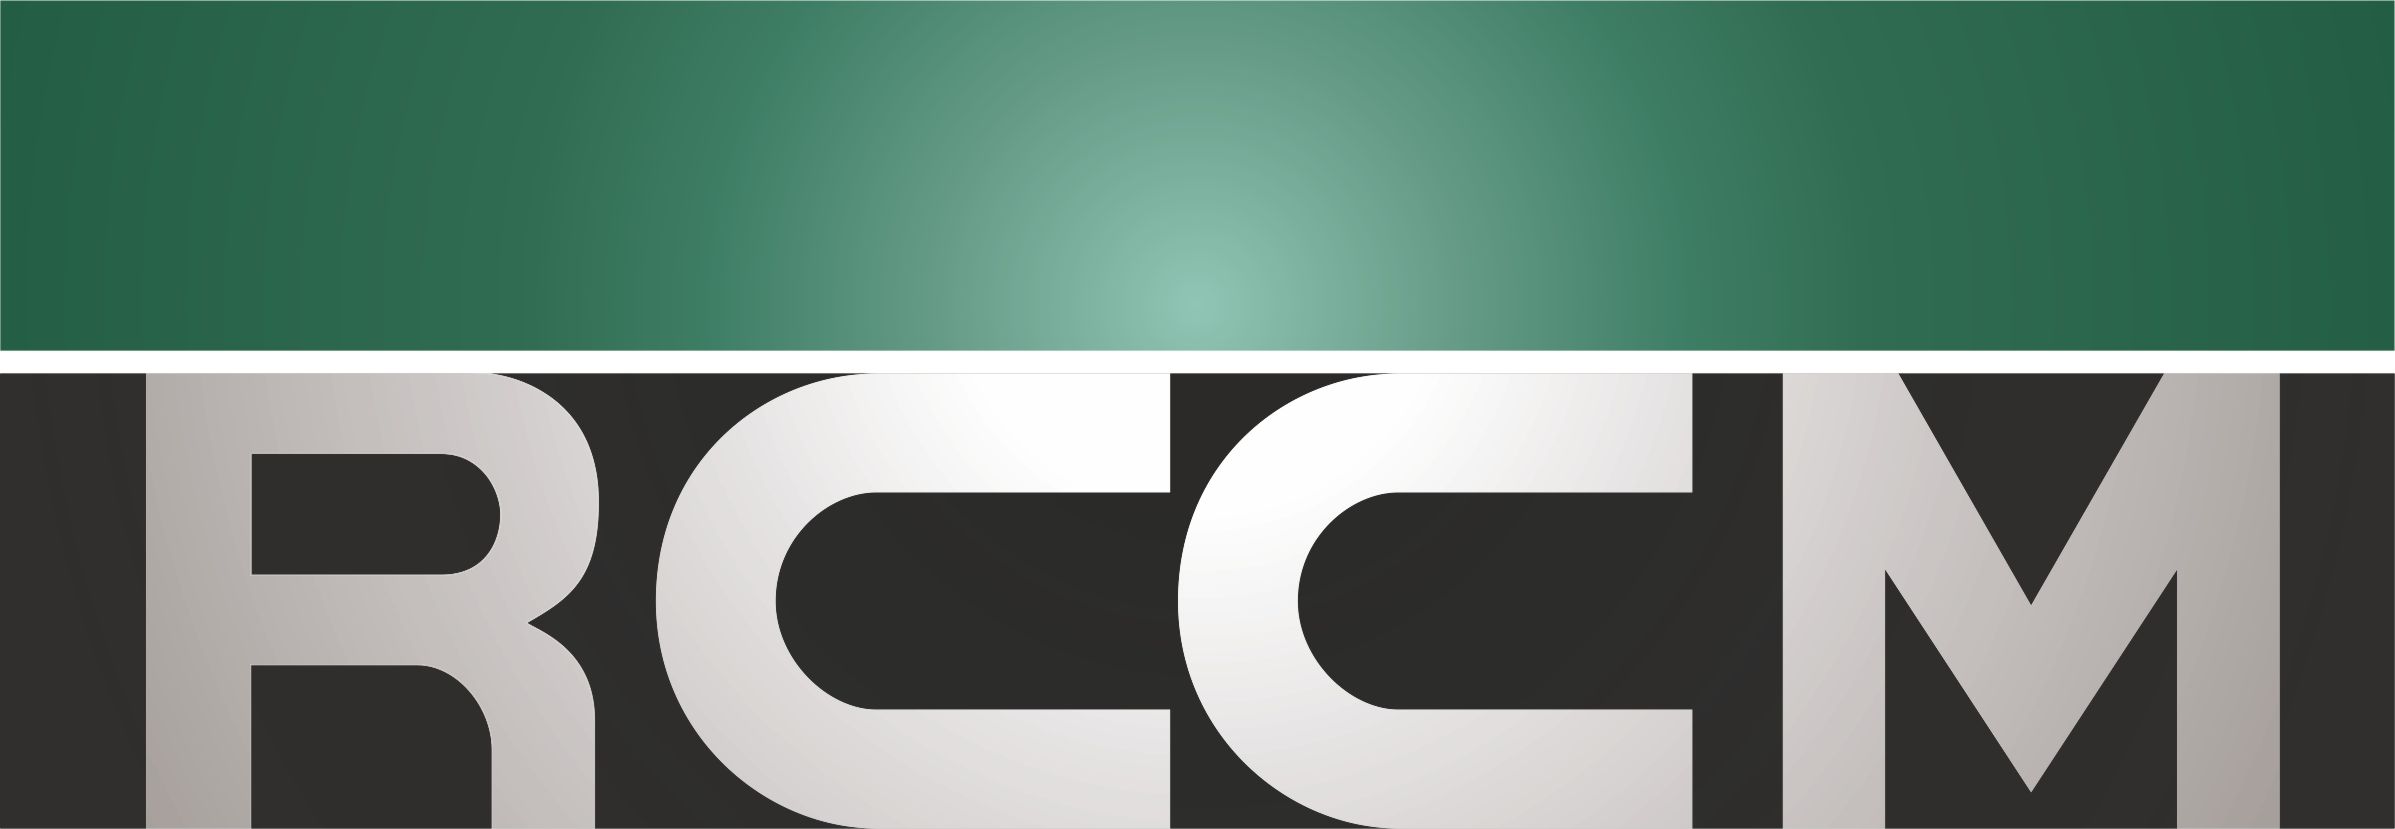 Mechanics_logo1.